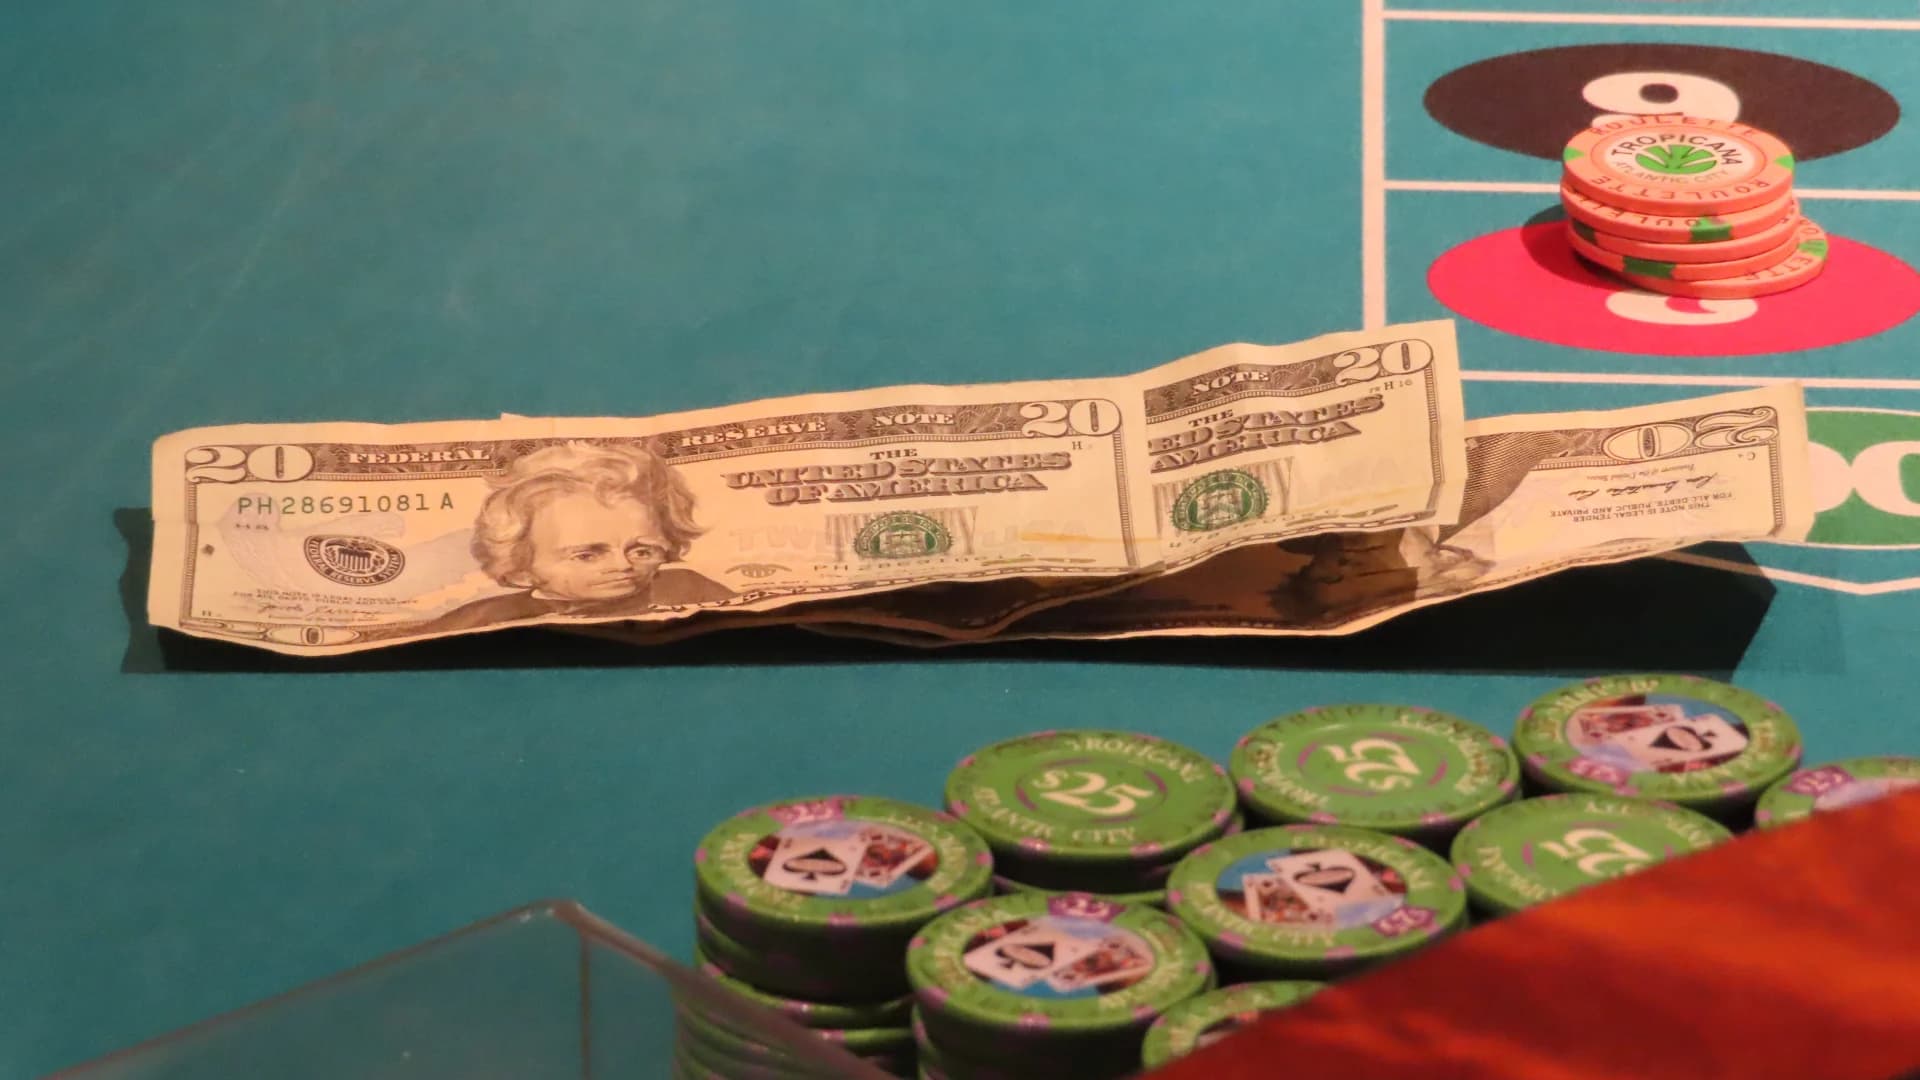 Atlantic City's casinos earnings rise, but some still lag